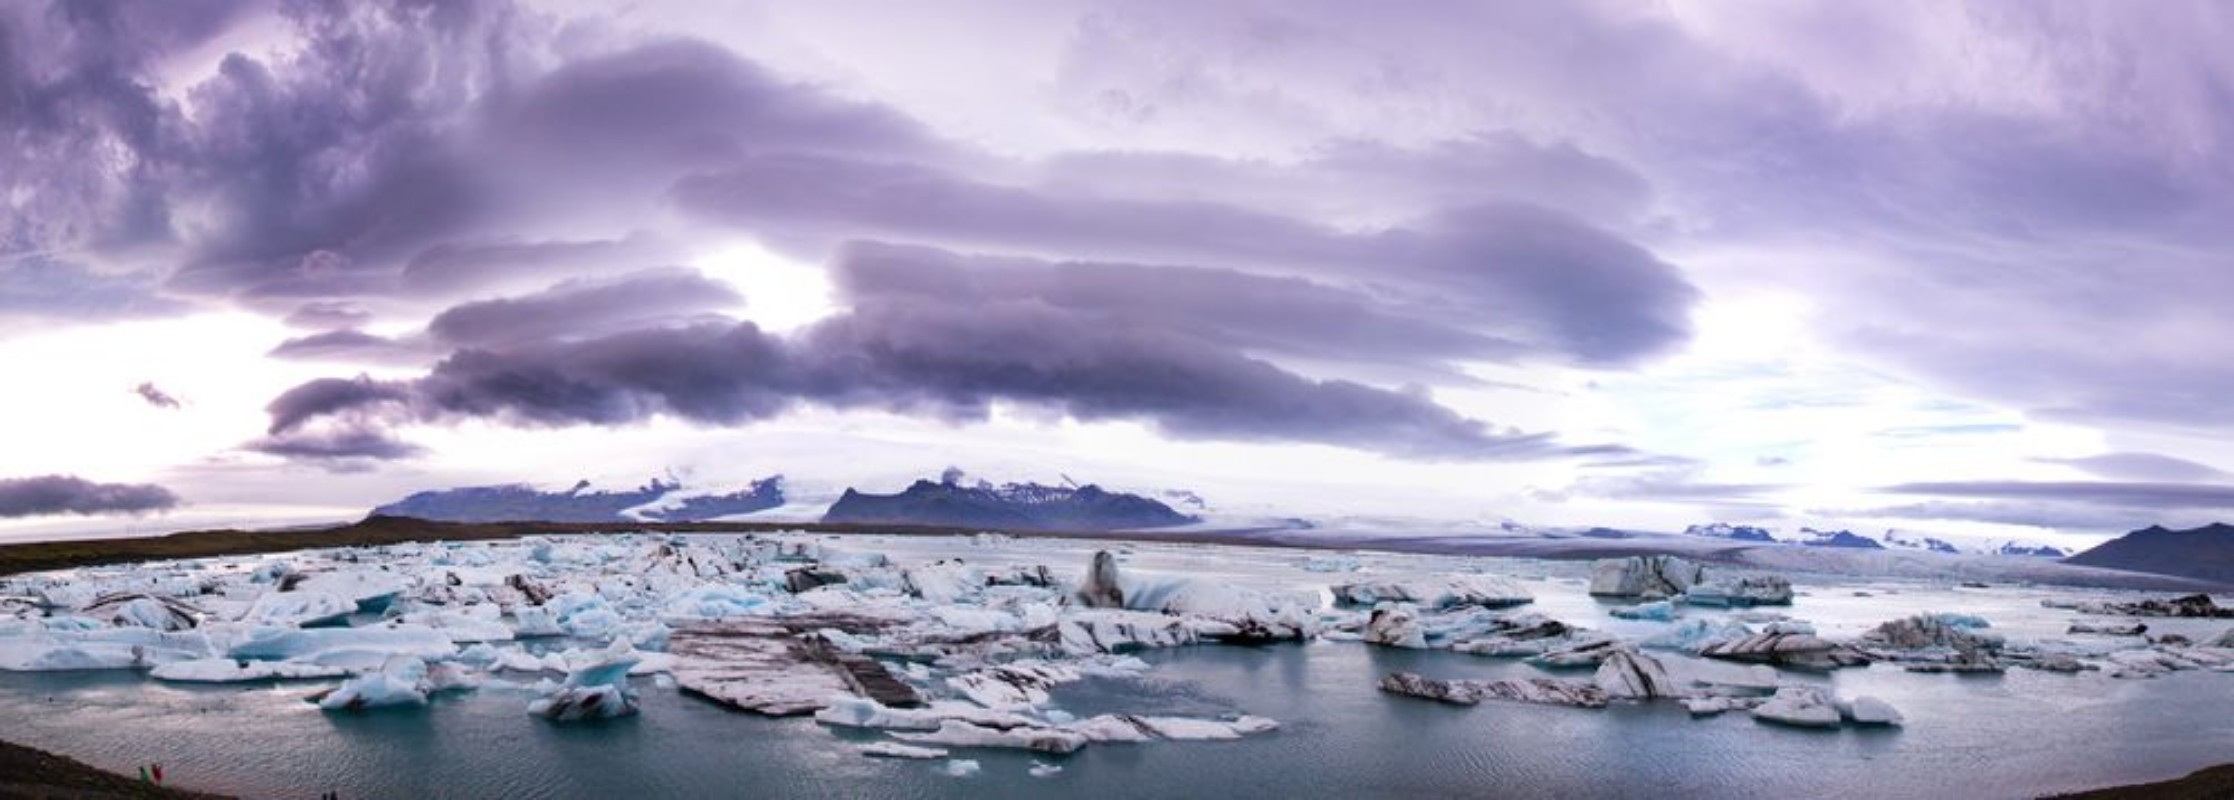 Image de Jkulsarlohn - Gletschersee Island  Icelad